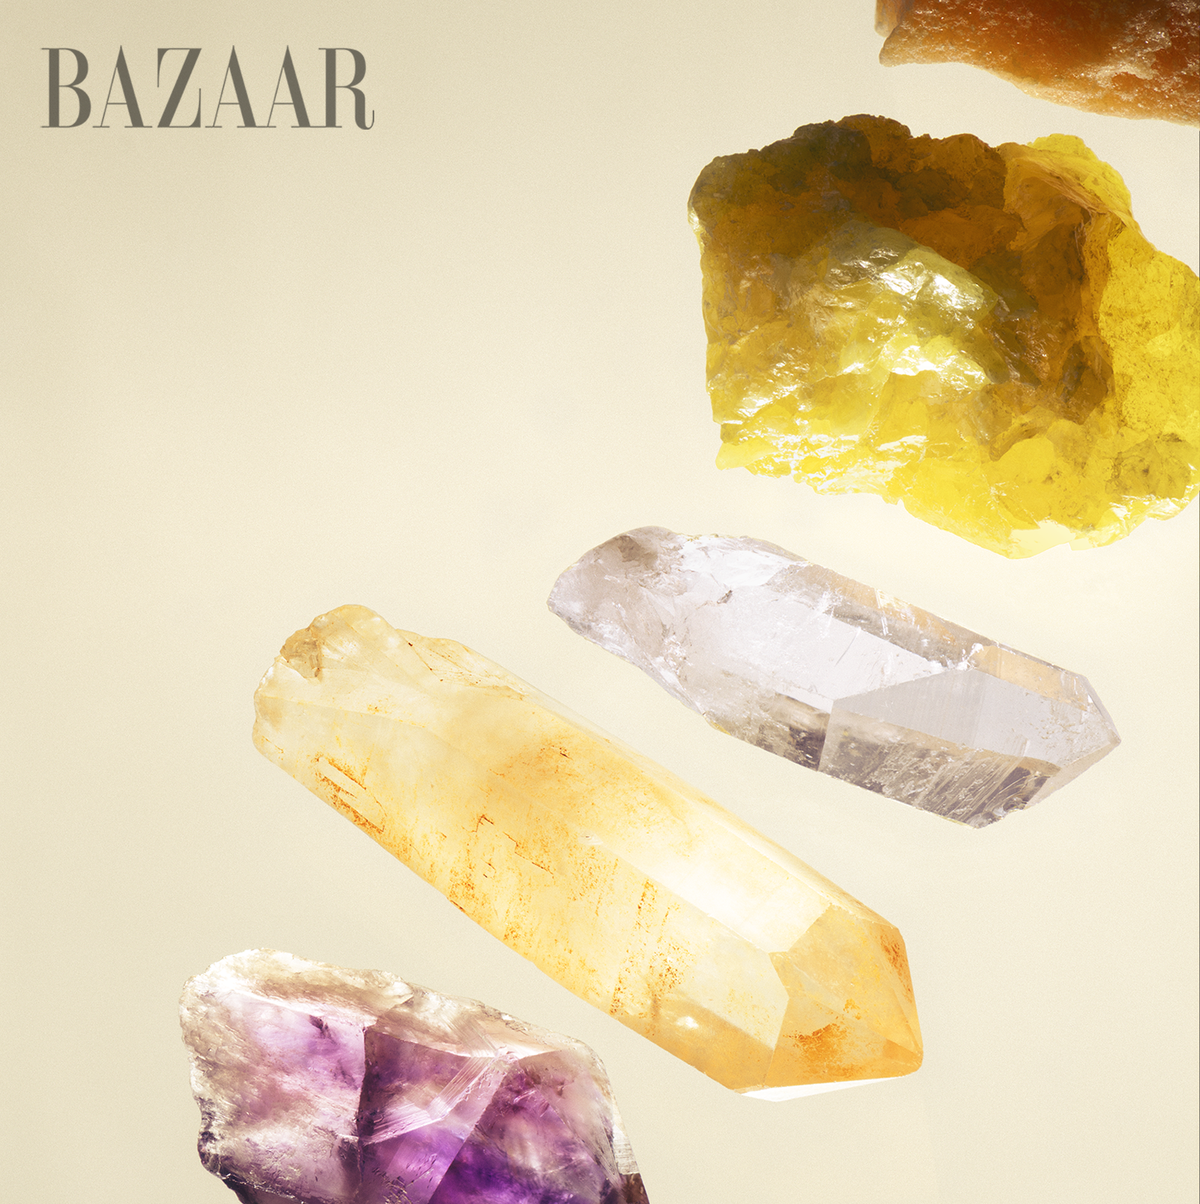 Harper's BAZAAR - Your Source for Fashion Trends, Beauty Tips, Pop